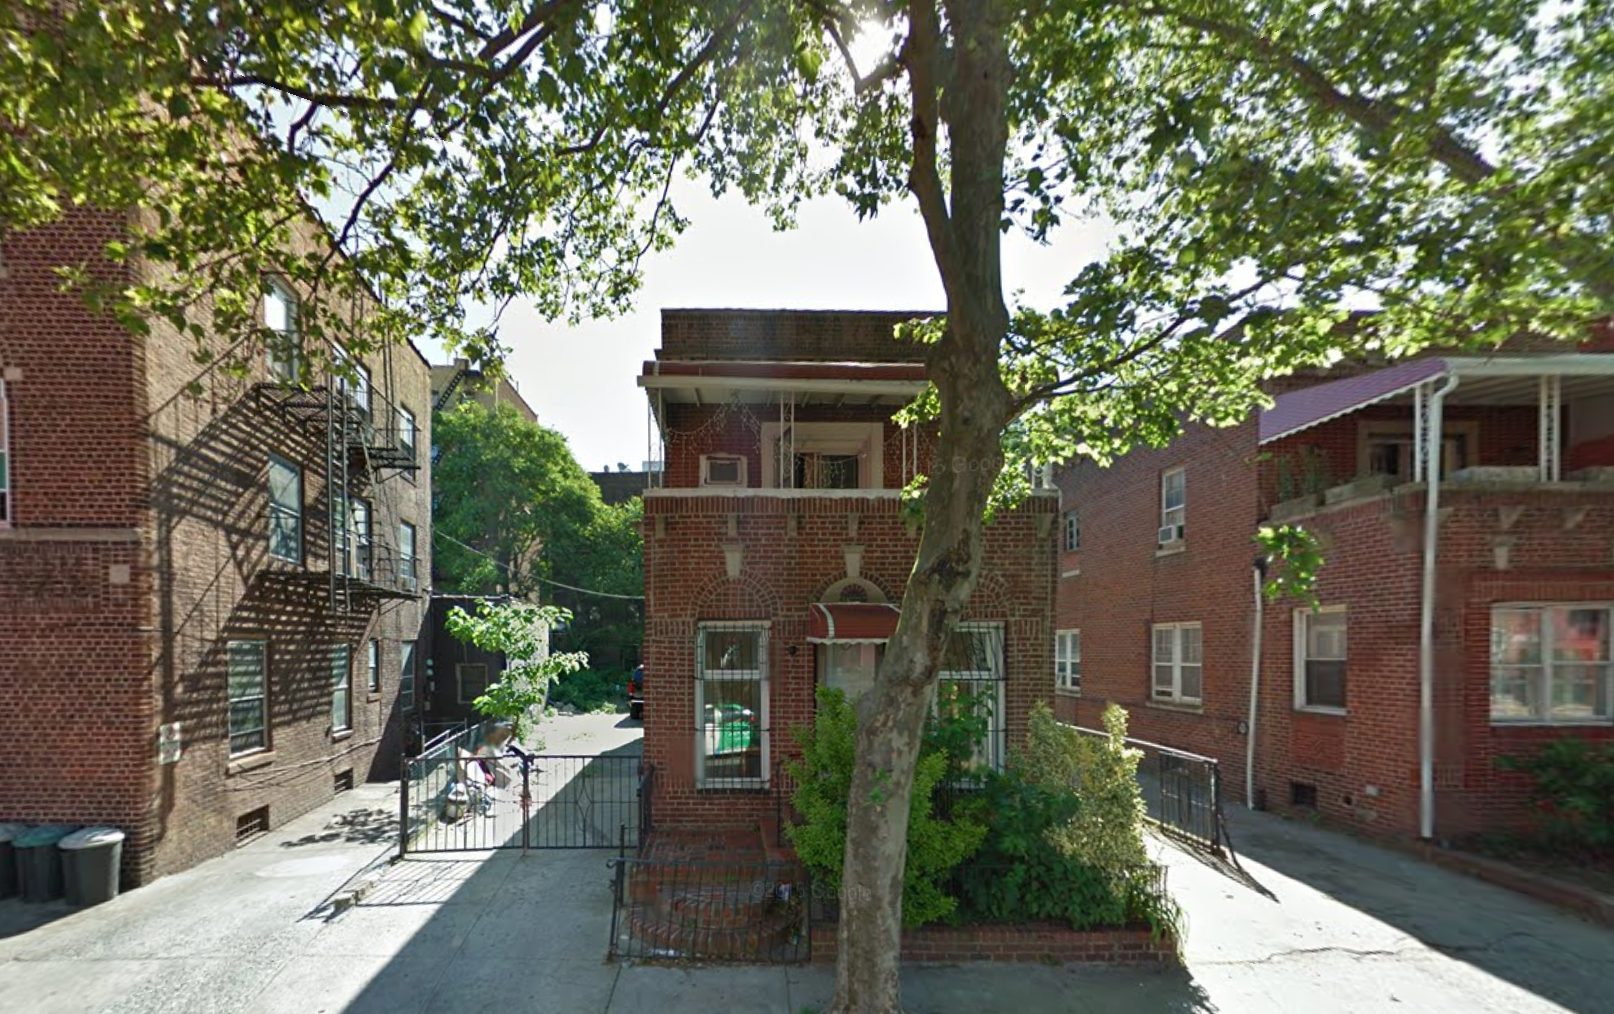 15 East 19th Street, image via Google Maps